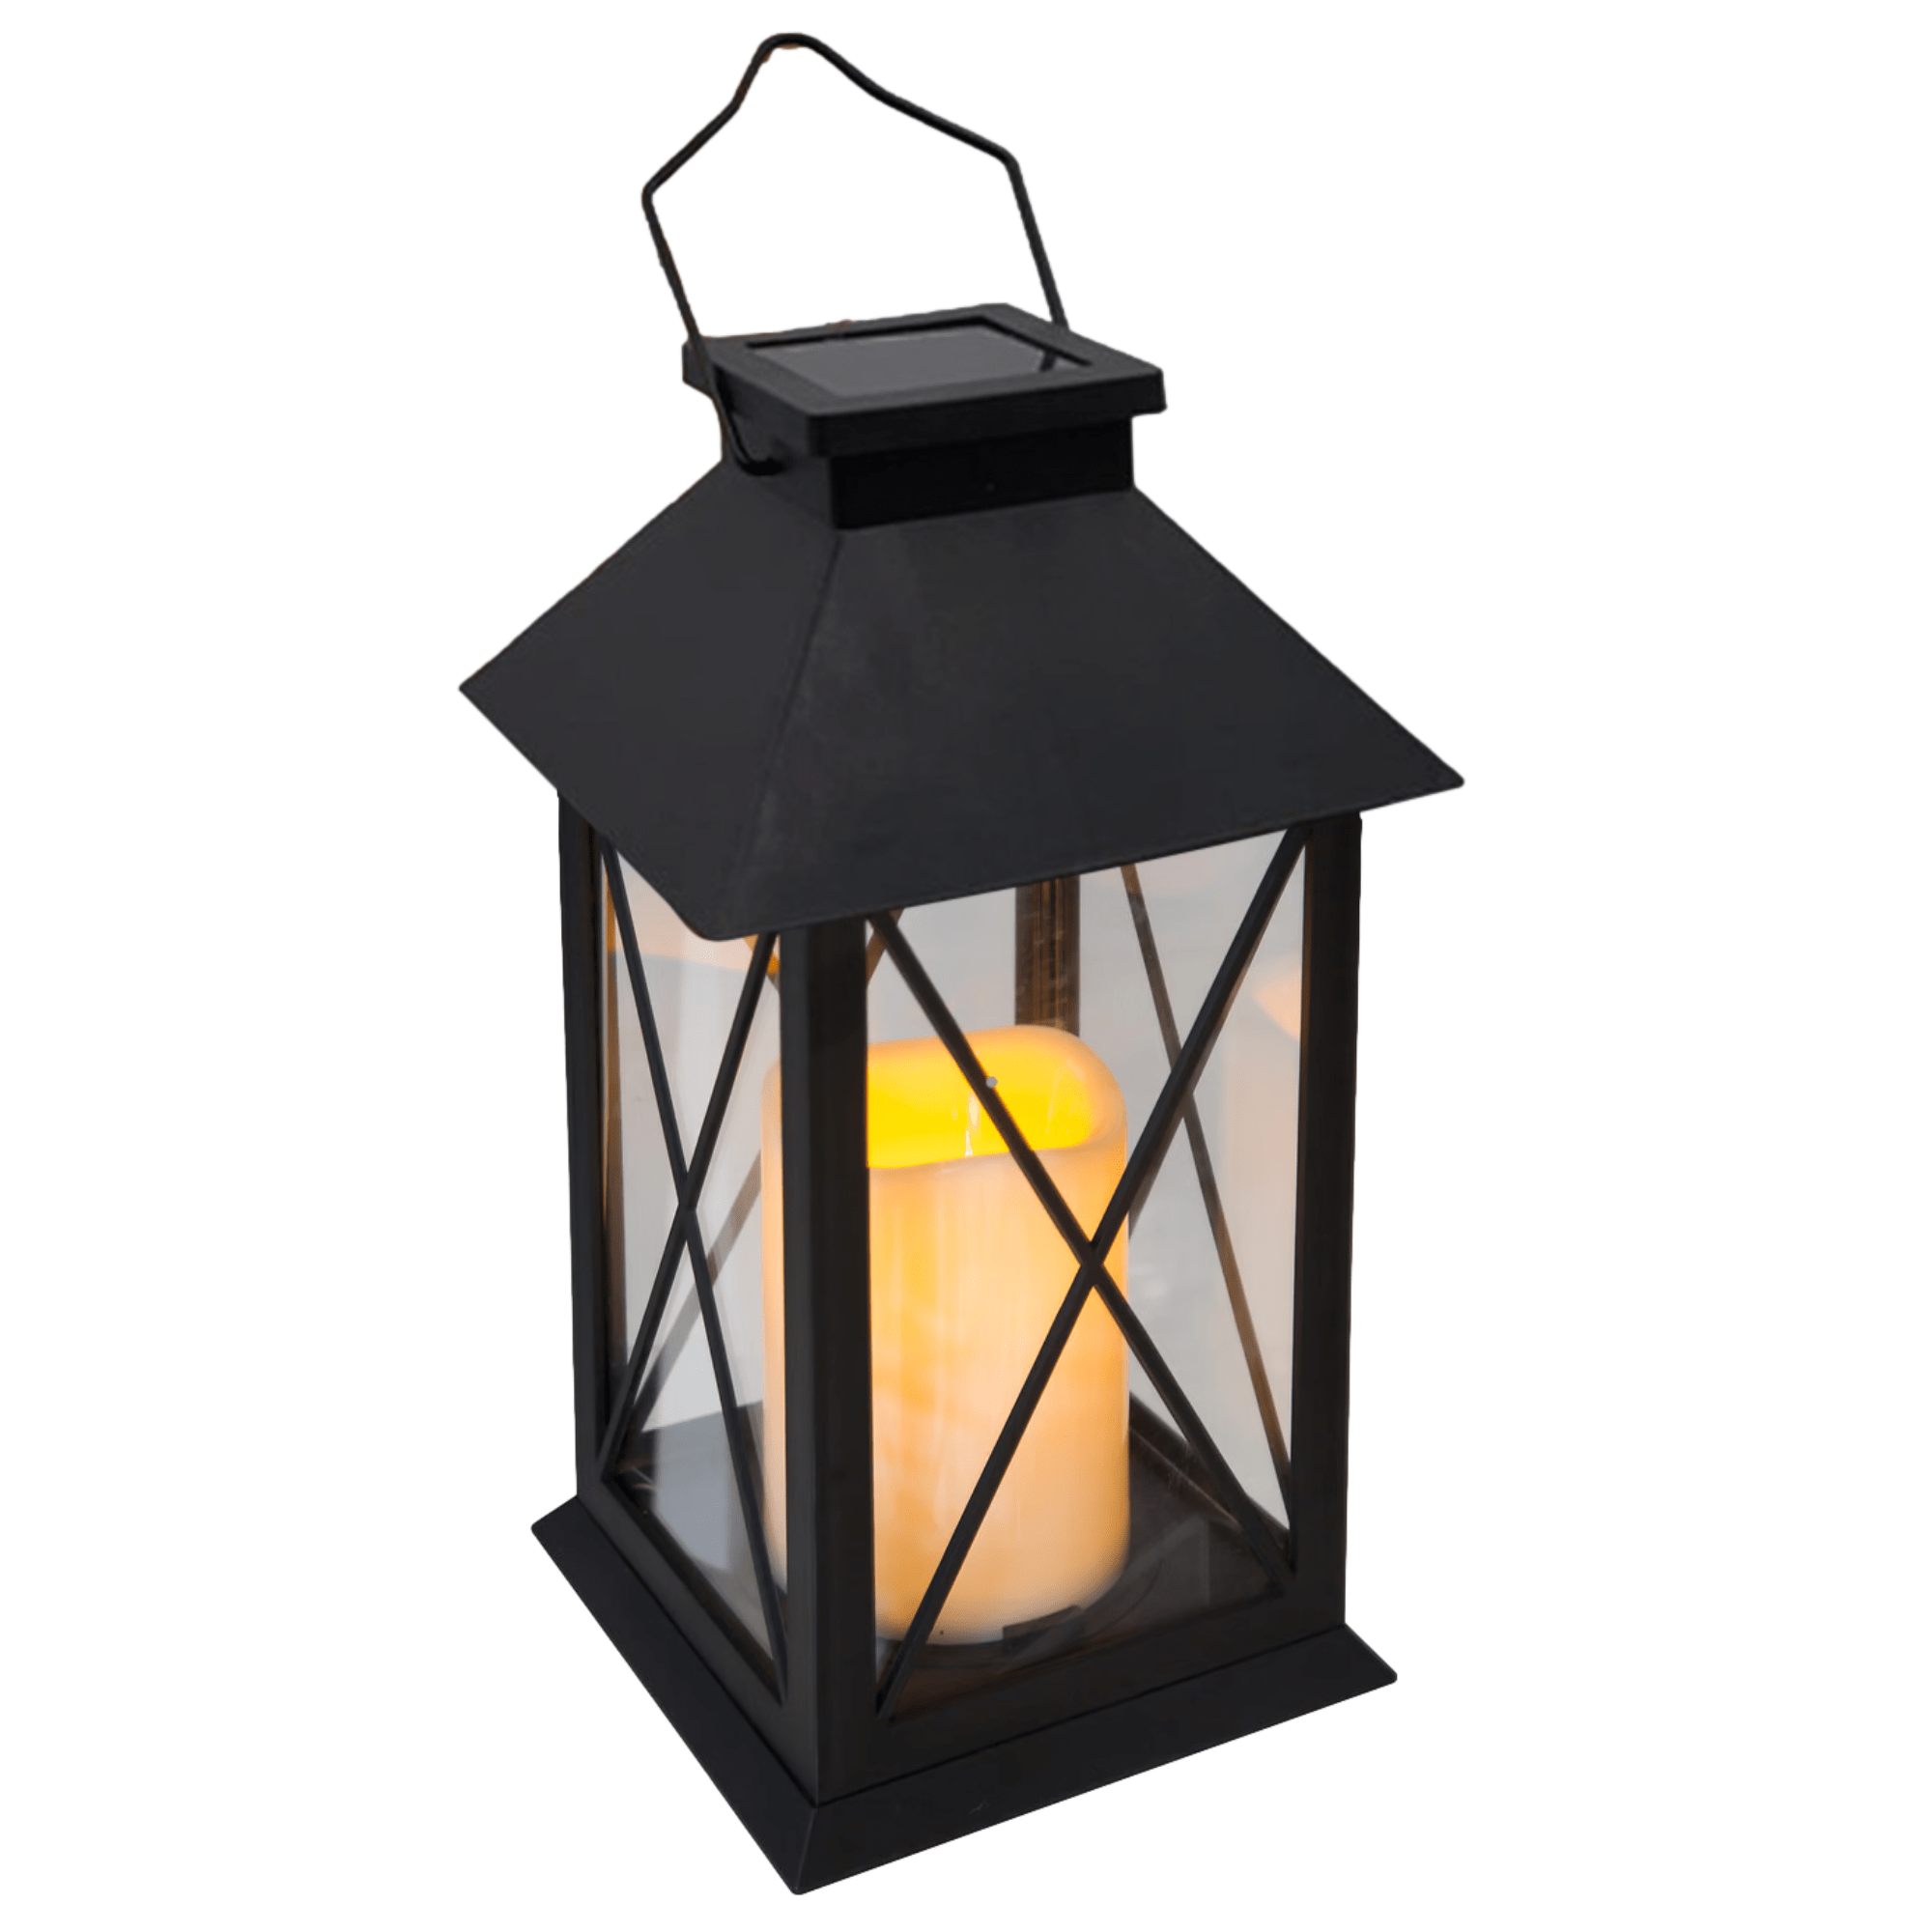 Tuin Lantaarn met LED Kaars Solar - Windlicht op Zonne-Energie - Tafellamp voor Buiten met Vlameffect - HomeShopXL